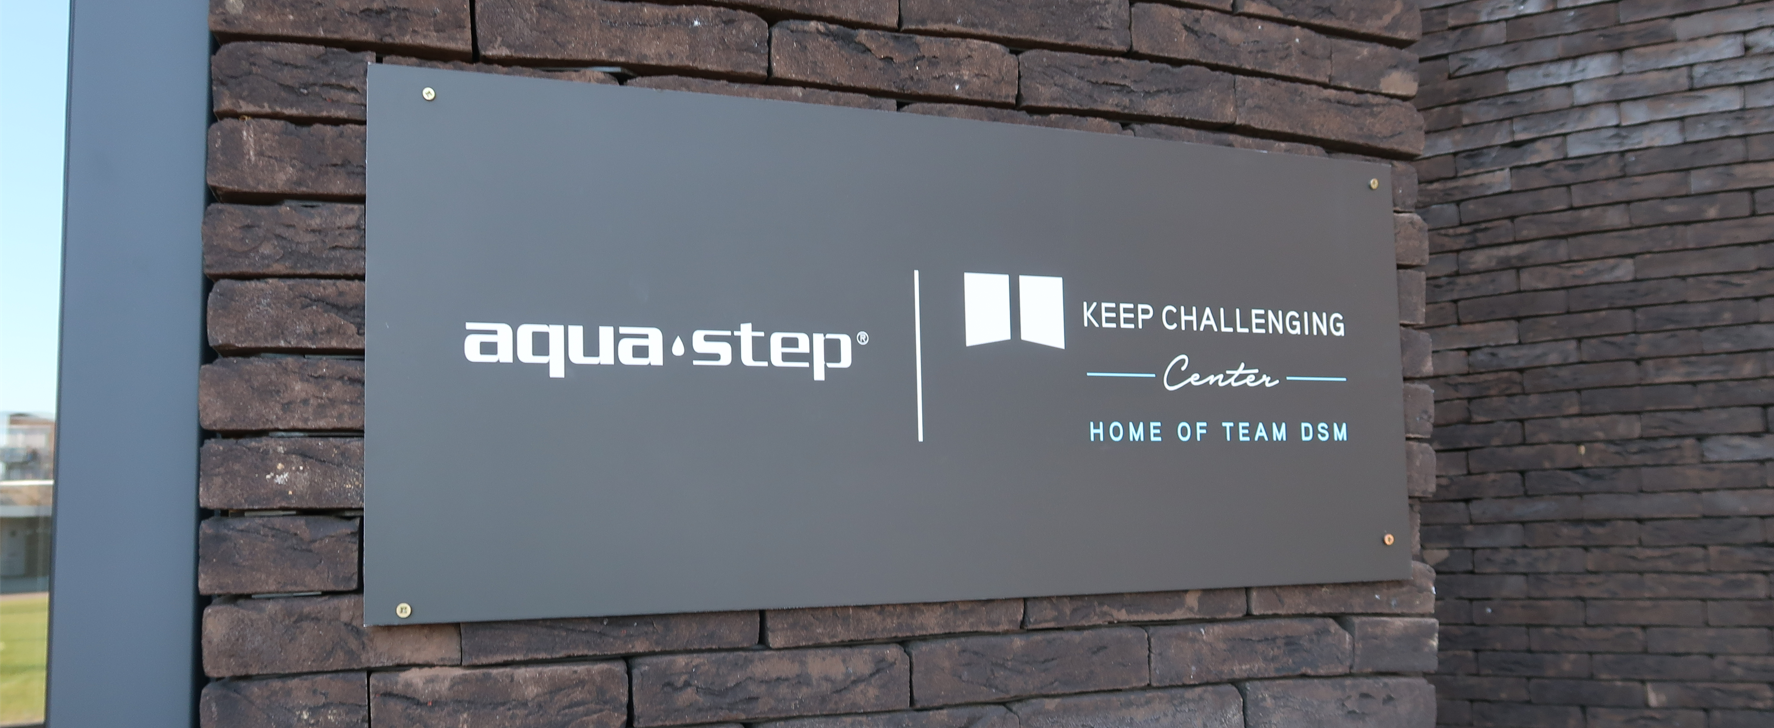 aqua-step keep challenging center